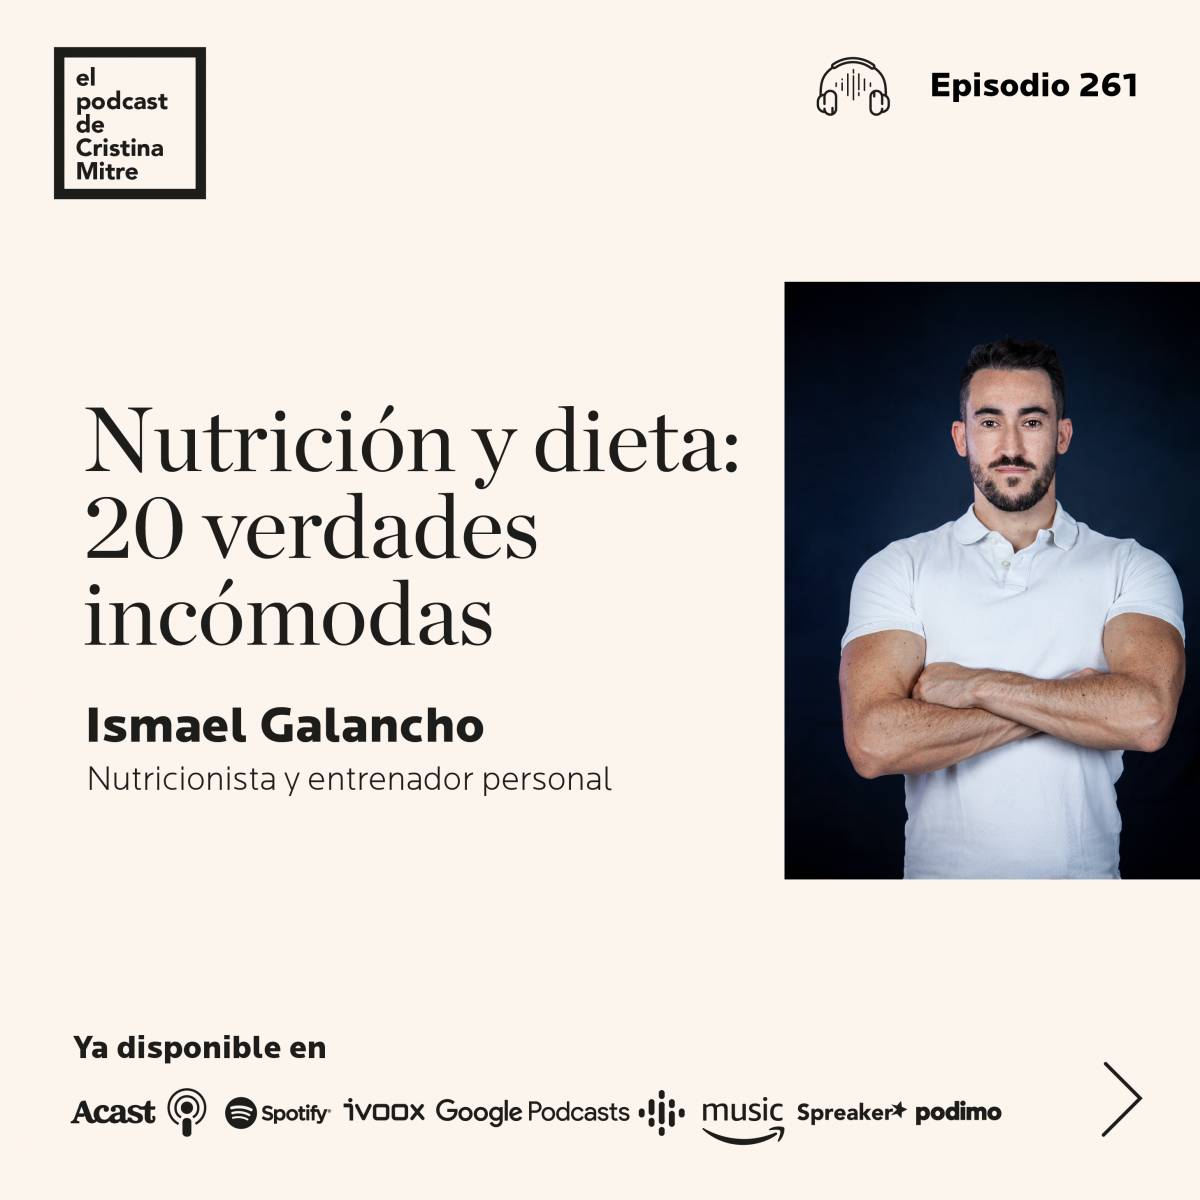 el podcast de cristina mitre ismael galancho nutrición